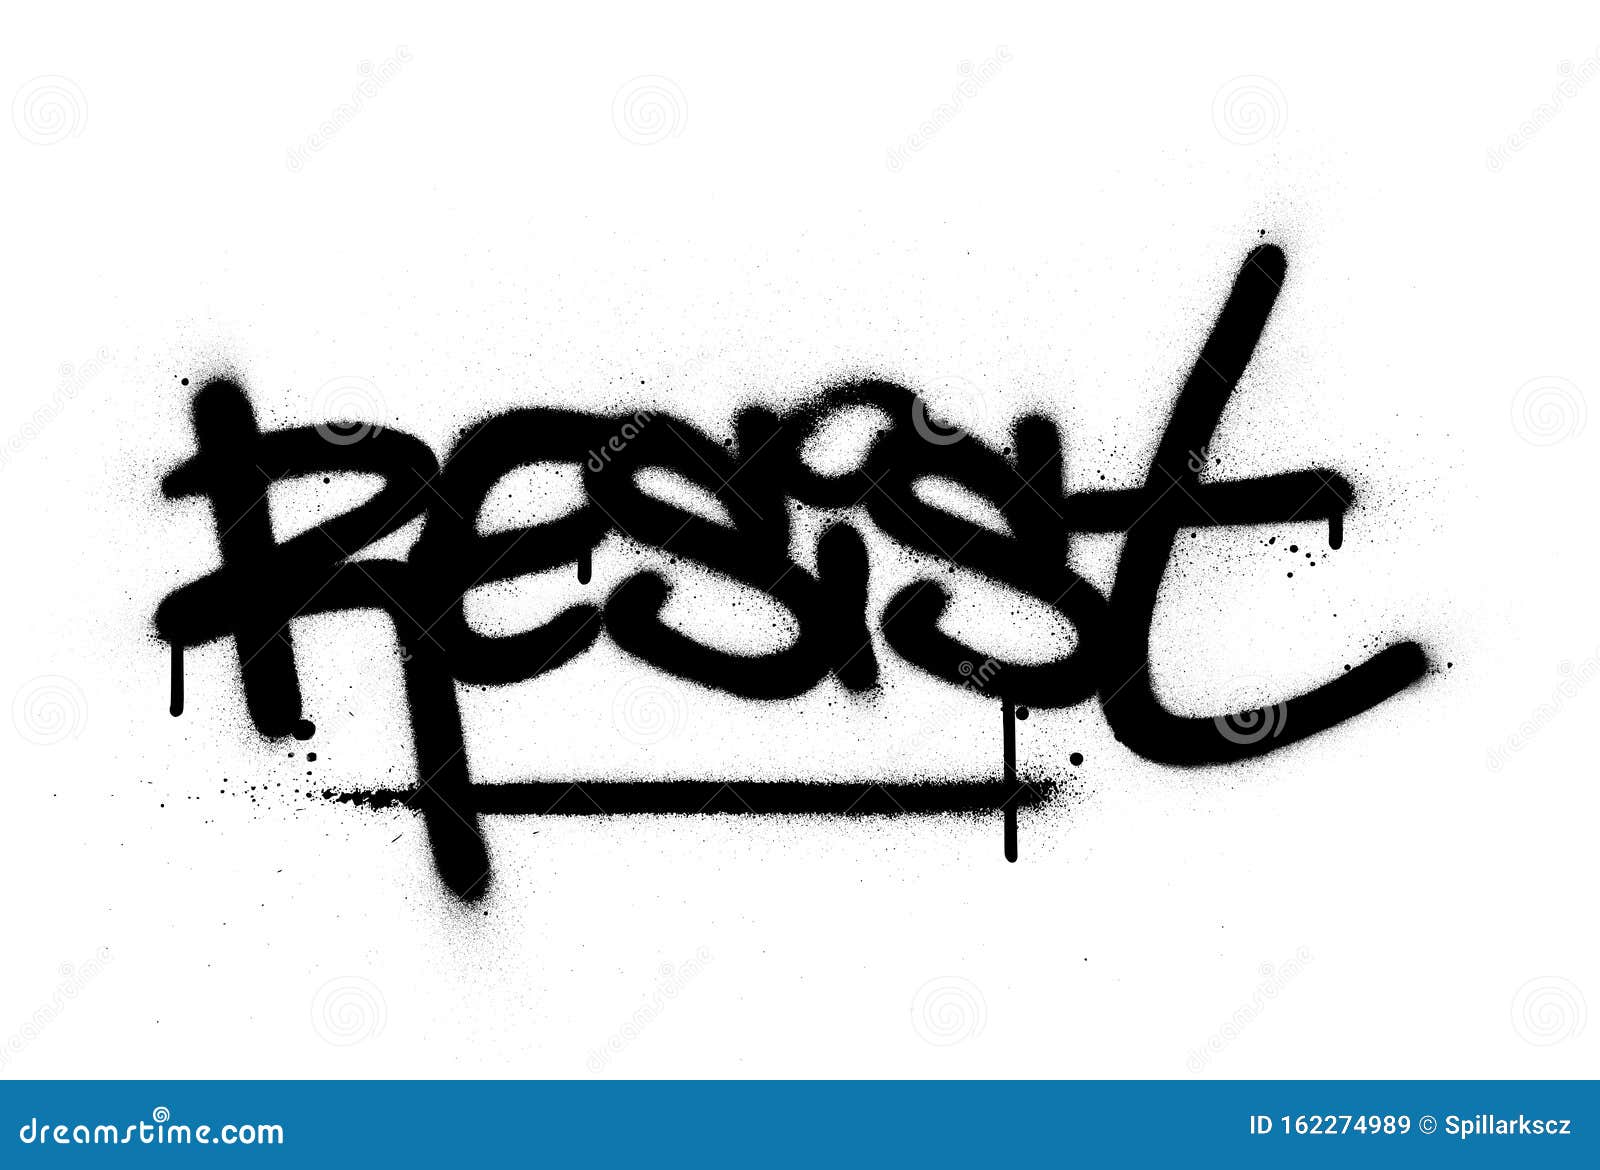 graffiti resist word sprayed in black over white